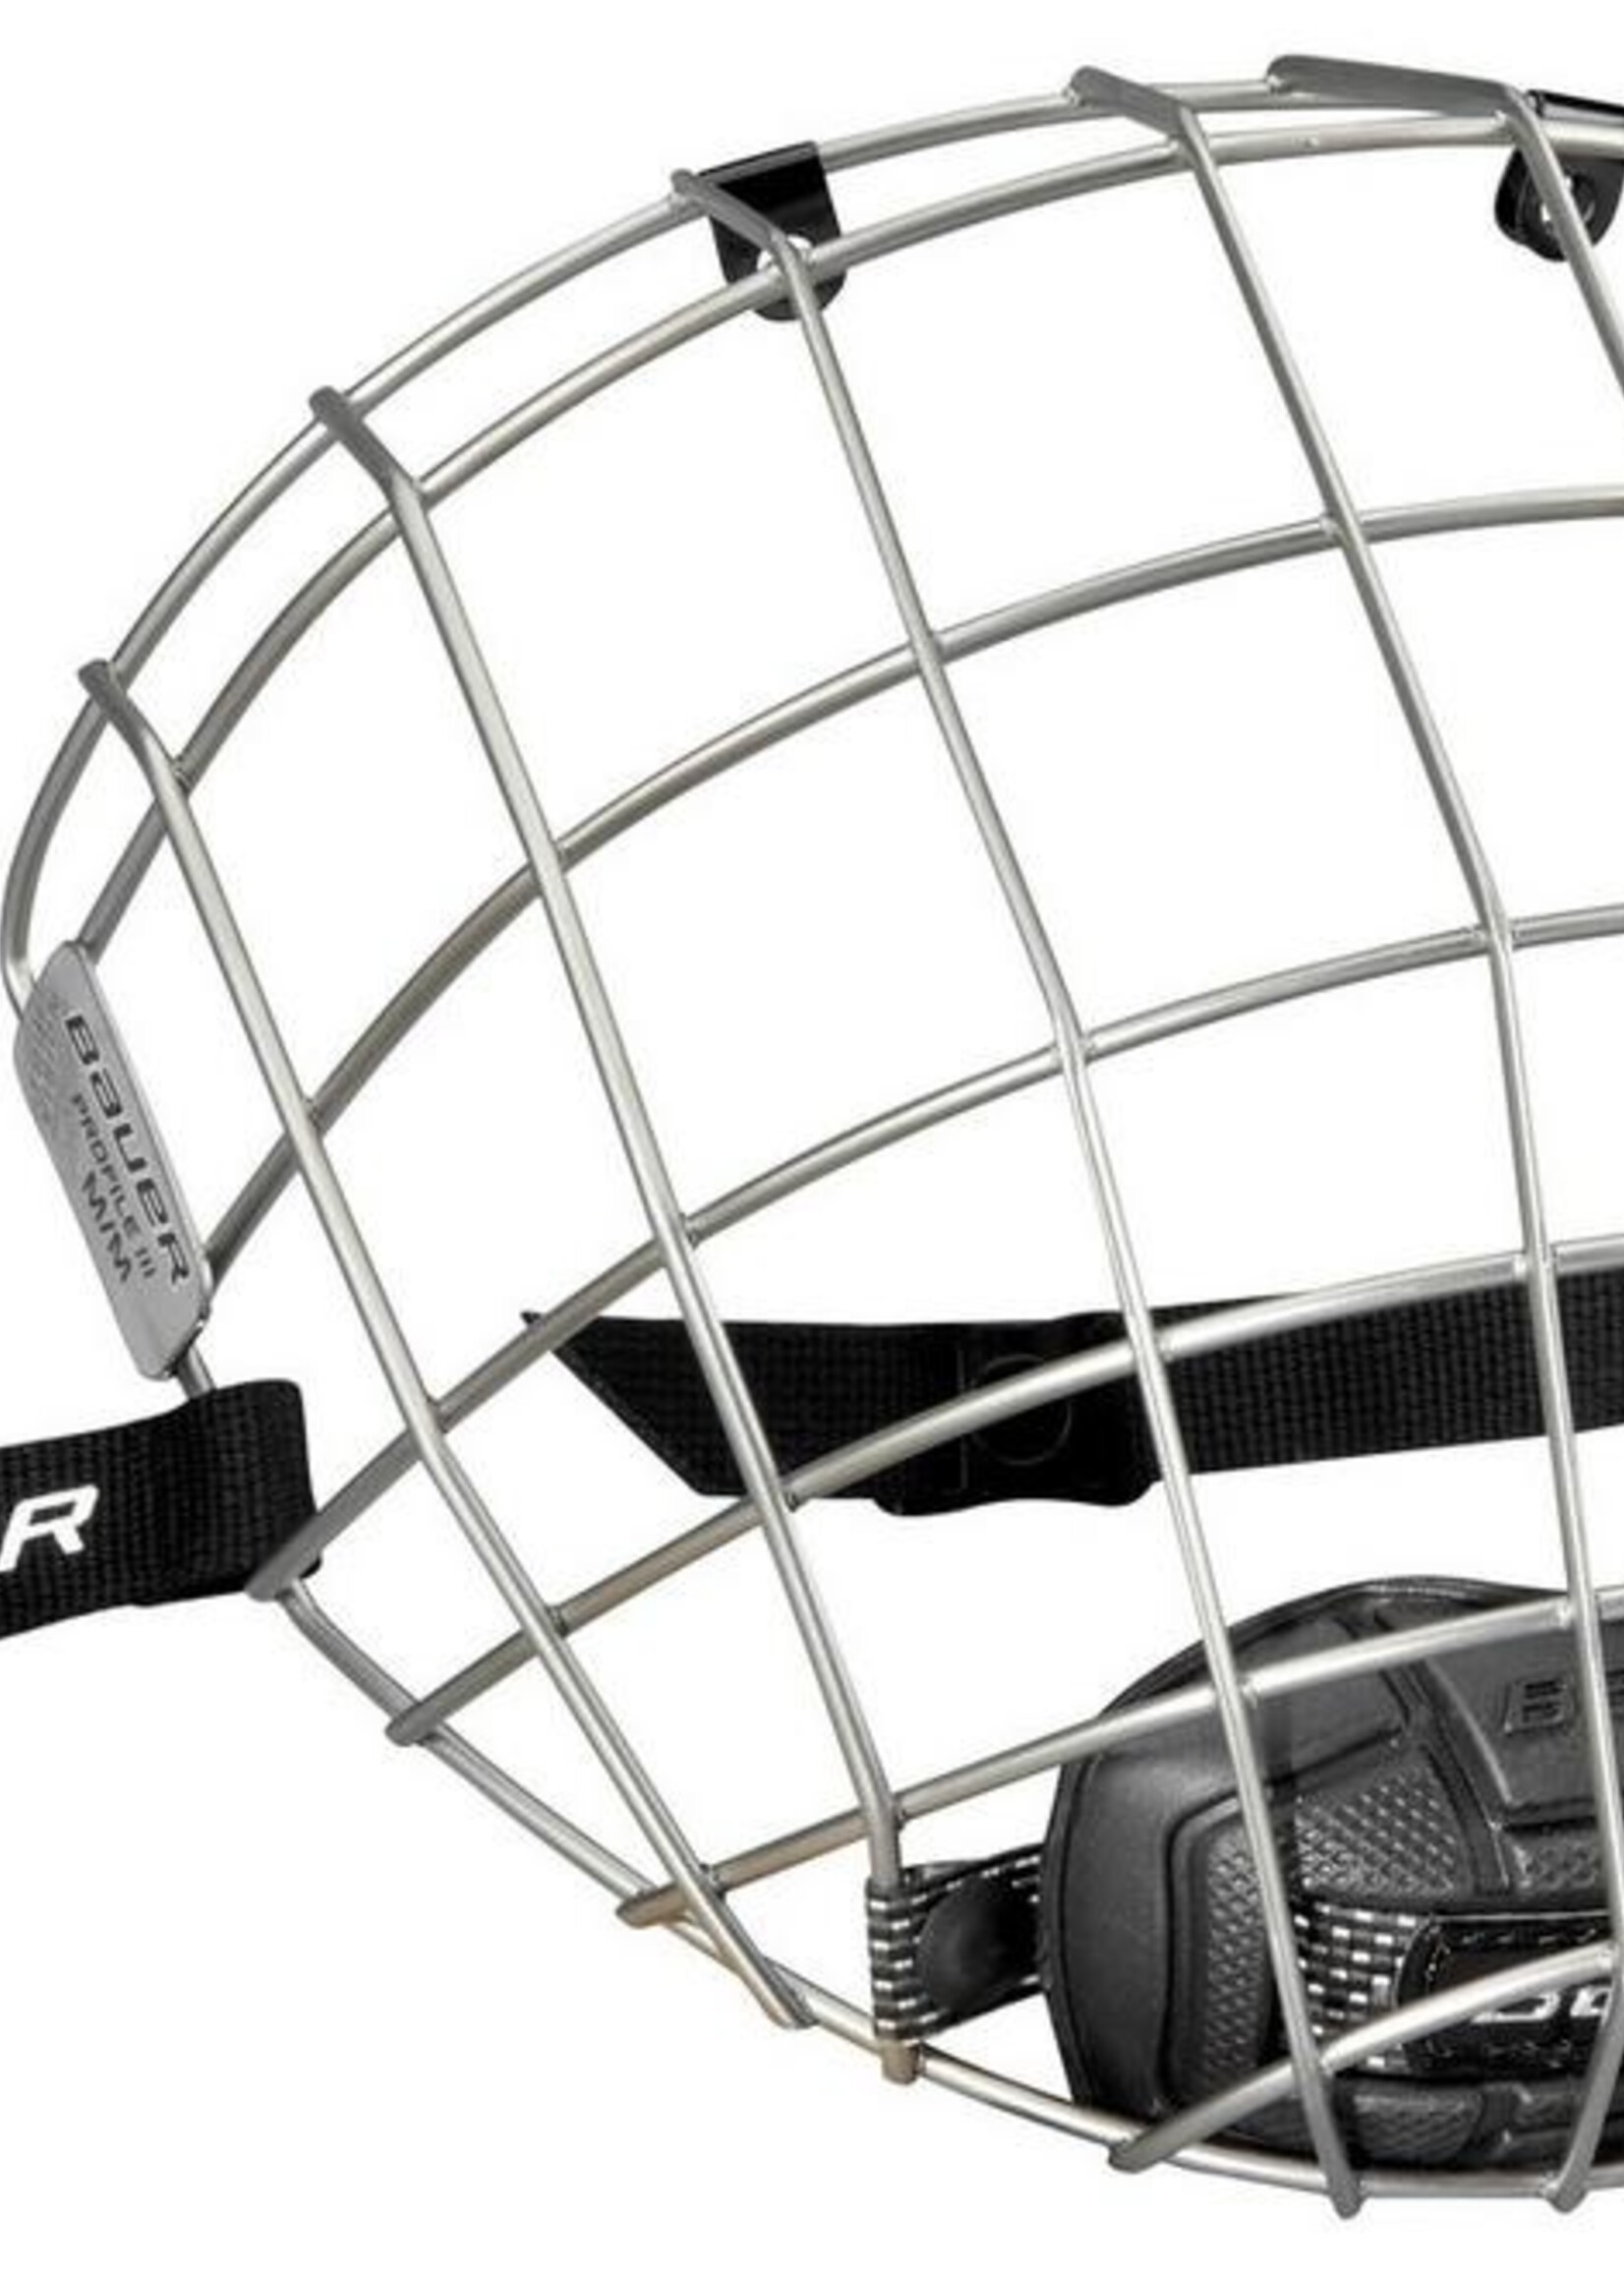 BAU Bauer Profile III Helmet Cage